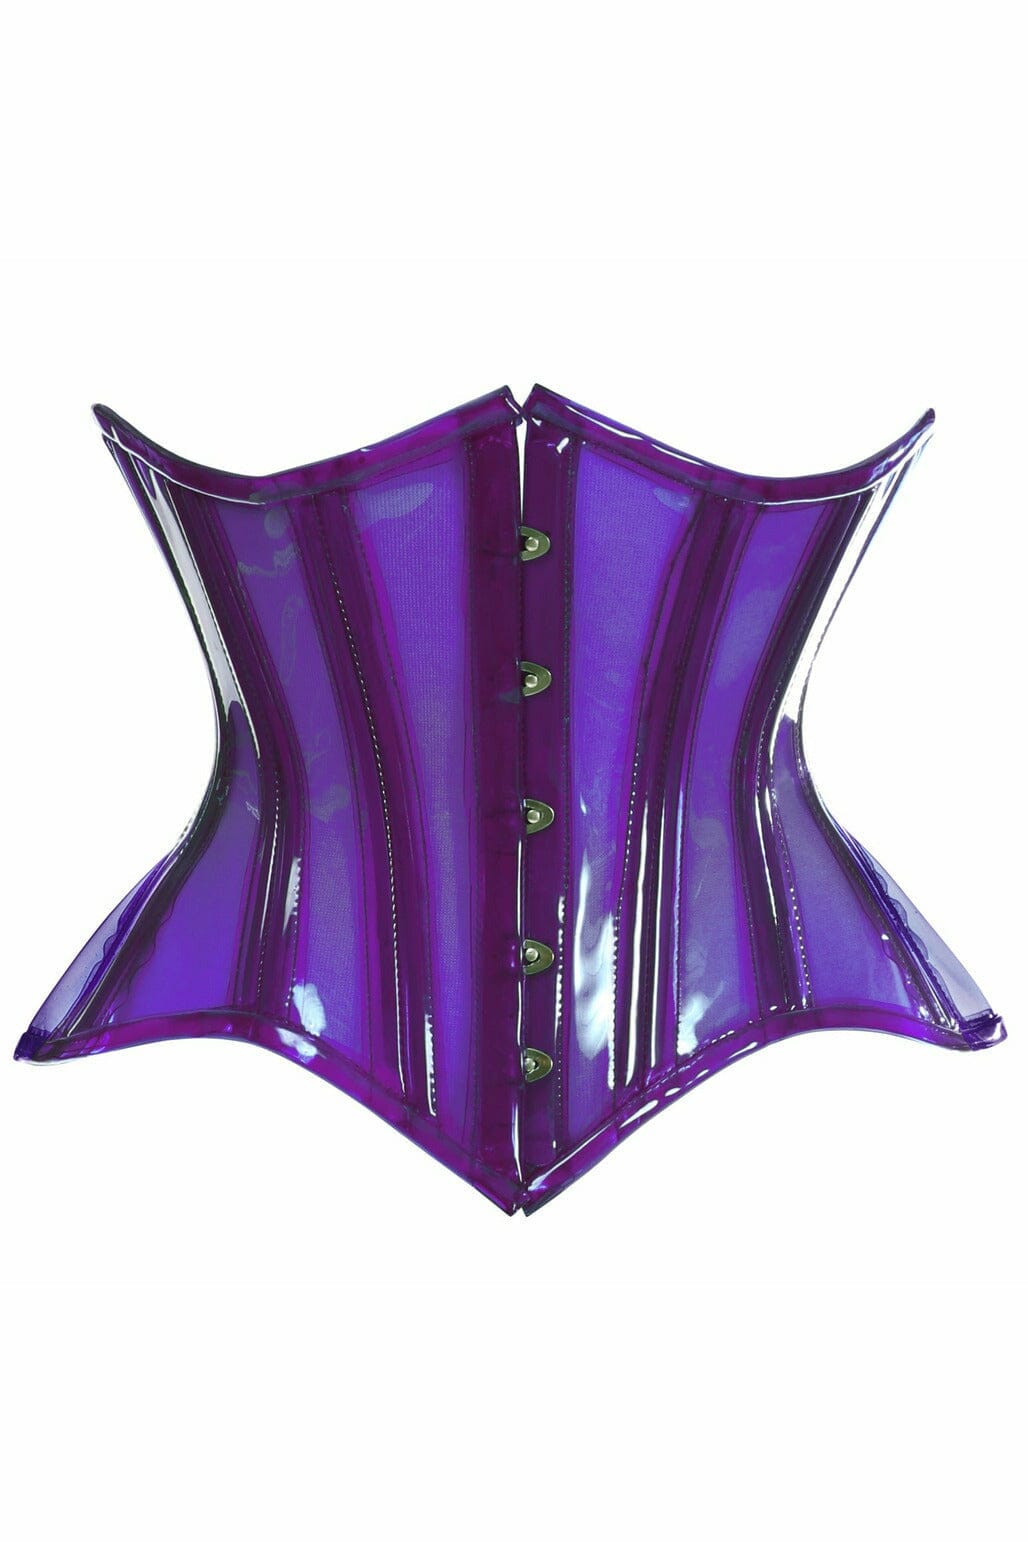 Lavish Purple Clear Curvy Underbust Waist Cincher Corset-Waist Cinchers-Daisy Corsets-Clear-S-SEXYSHOES.COM